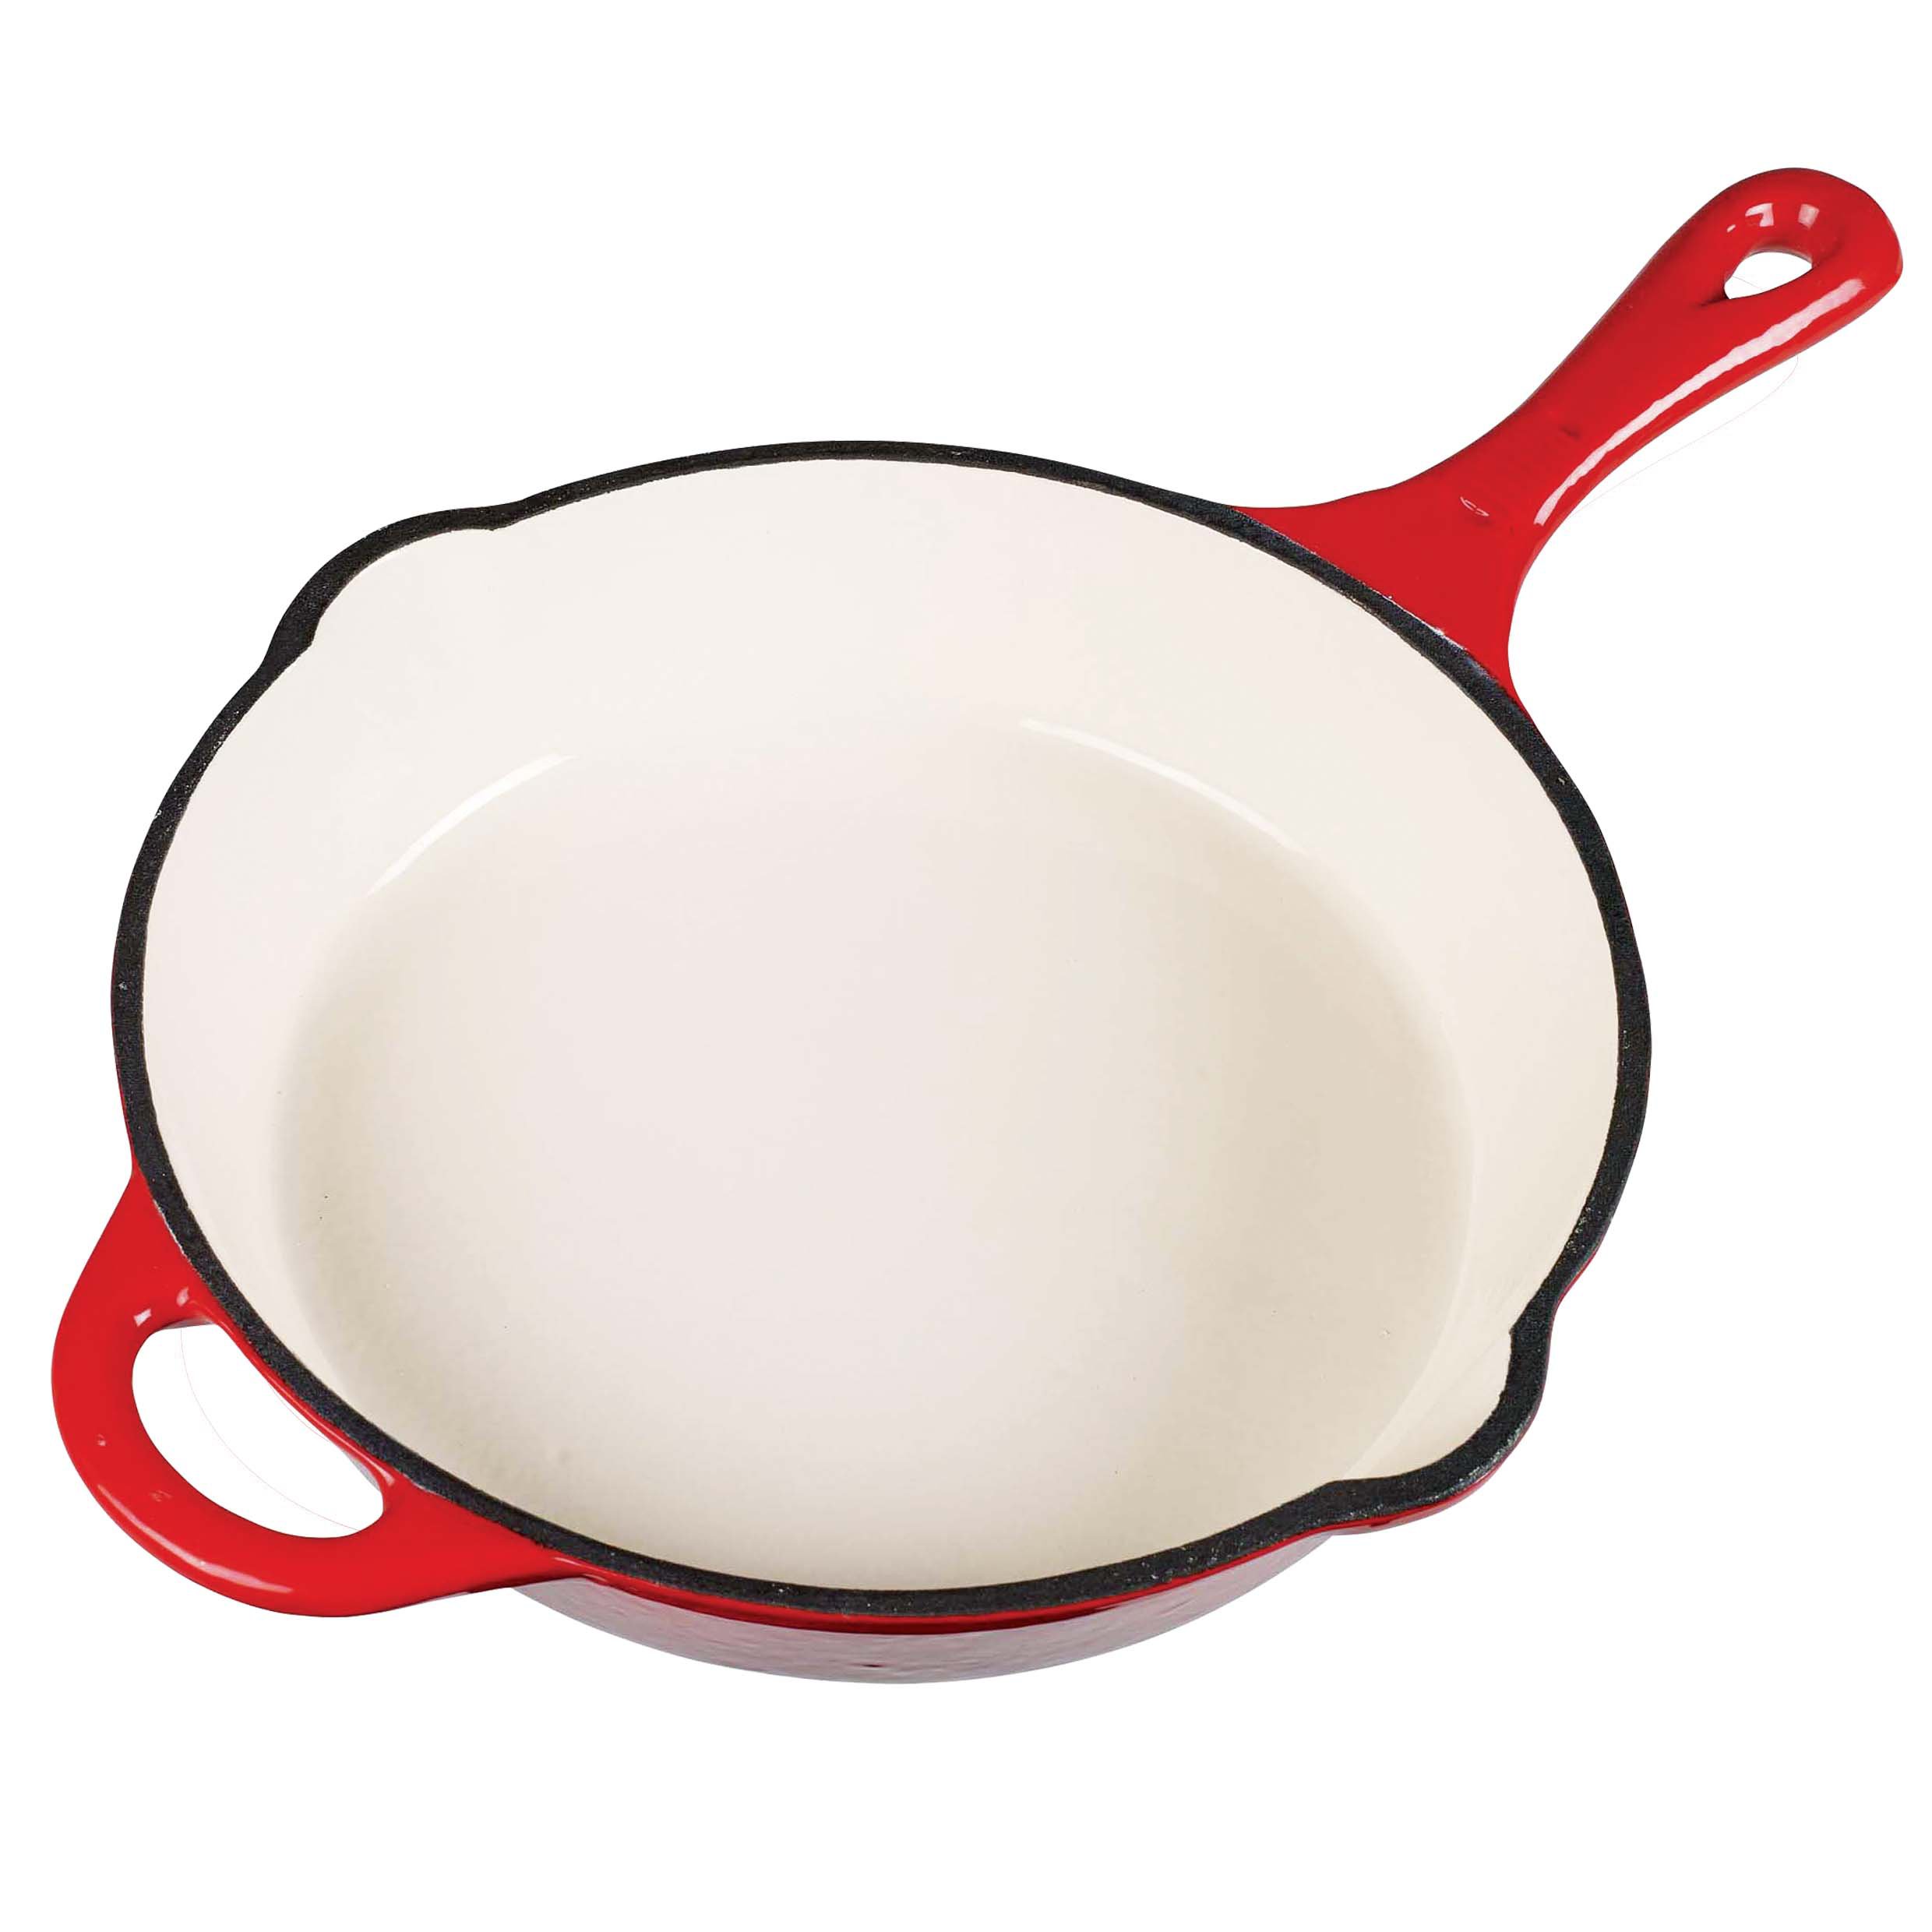 Cocinaware Red Enamel Cast Iron Fry Pan - Shop Frying Pans